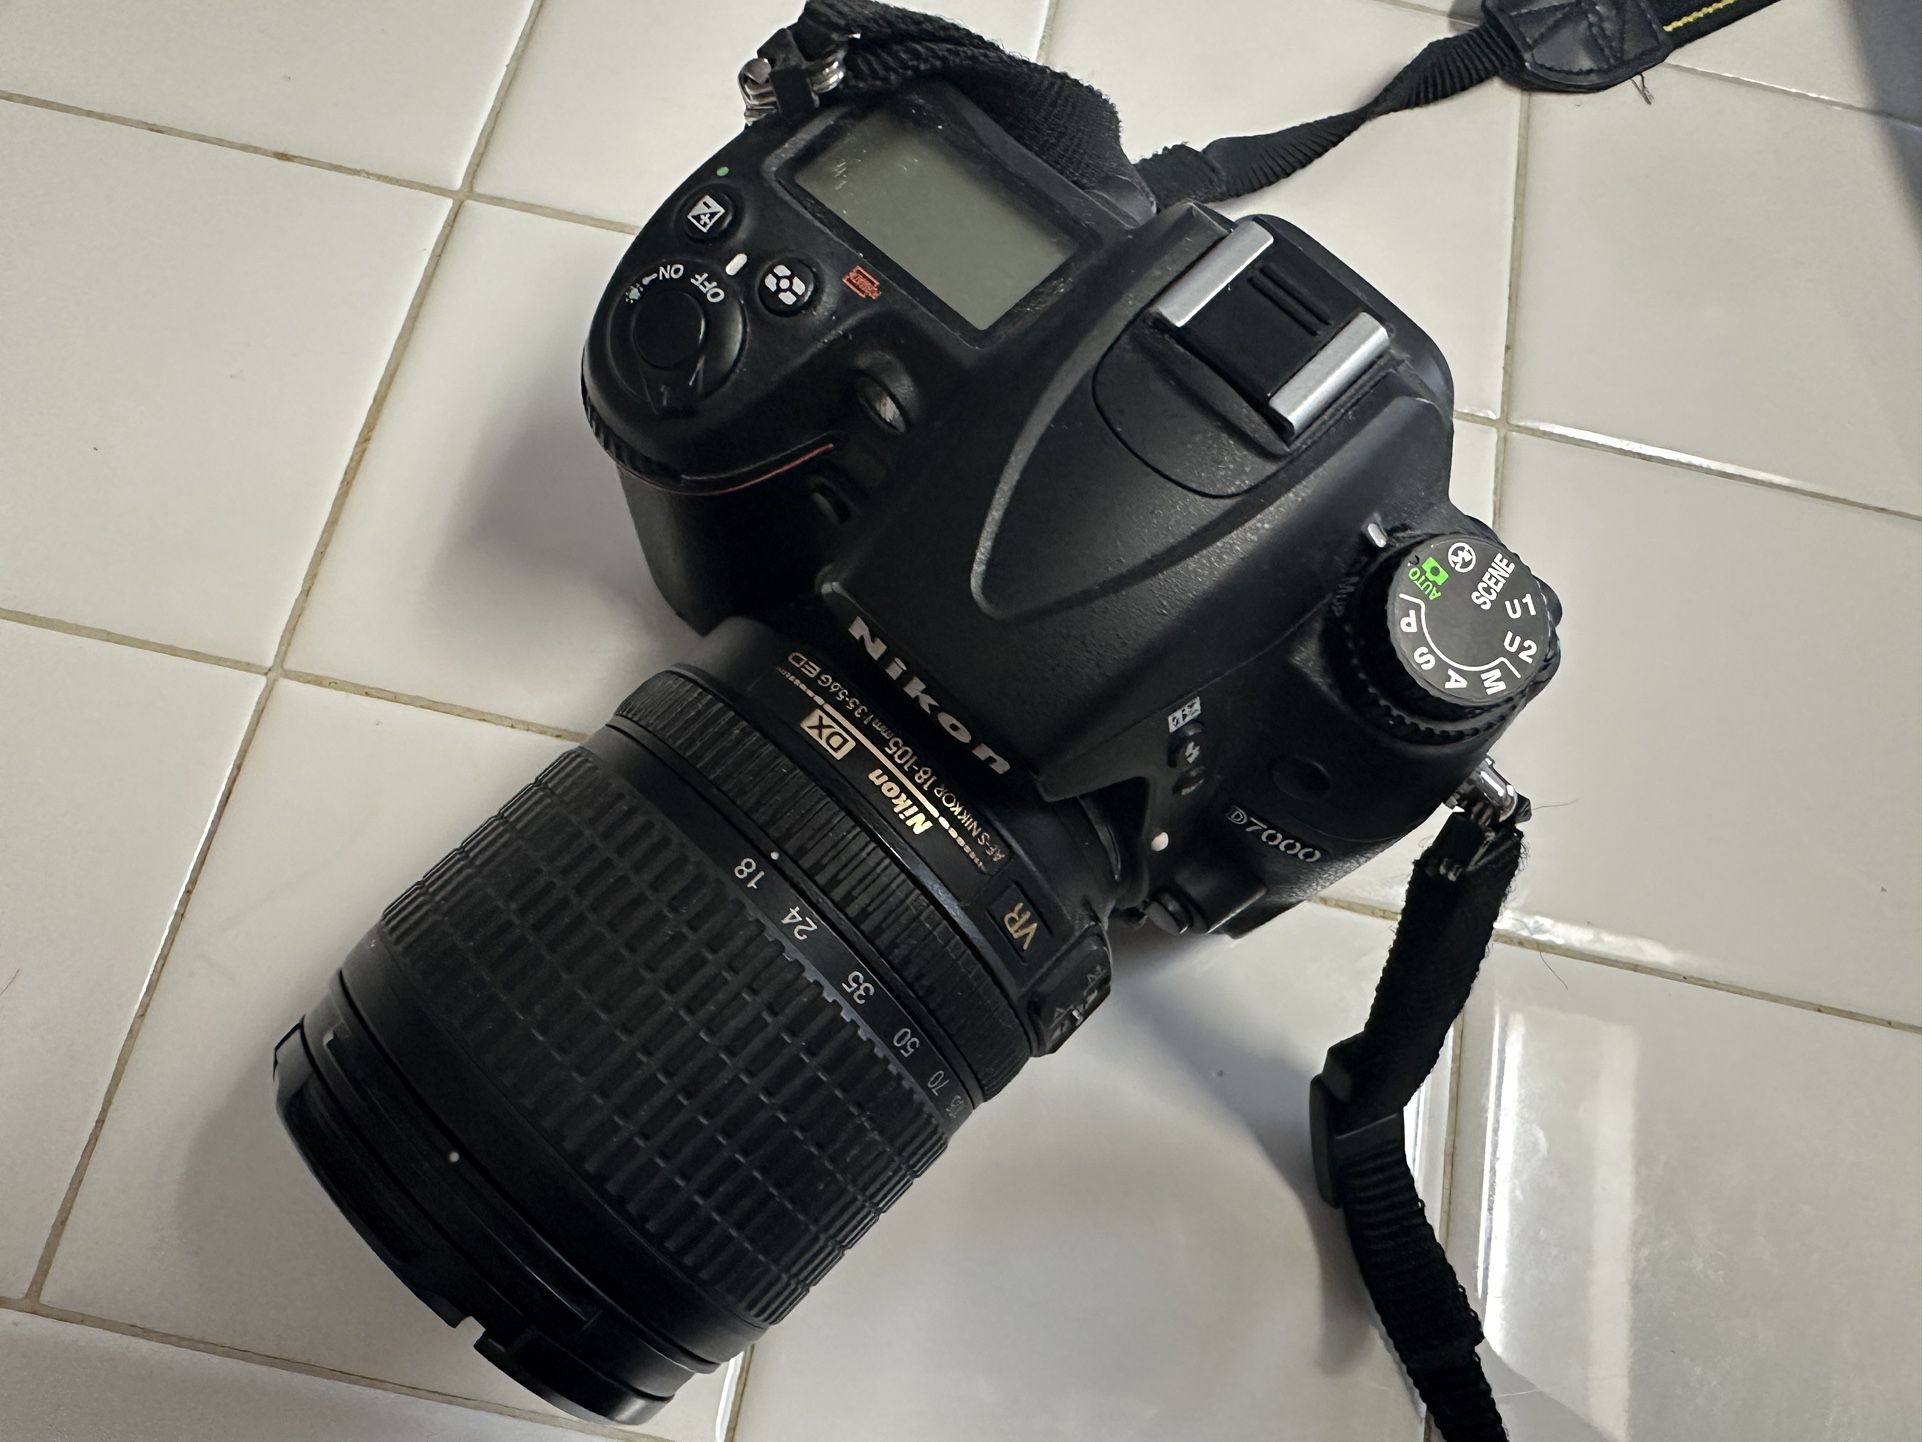 Nikon D7000 DSLR camera with lens! 